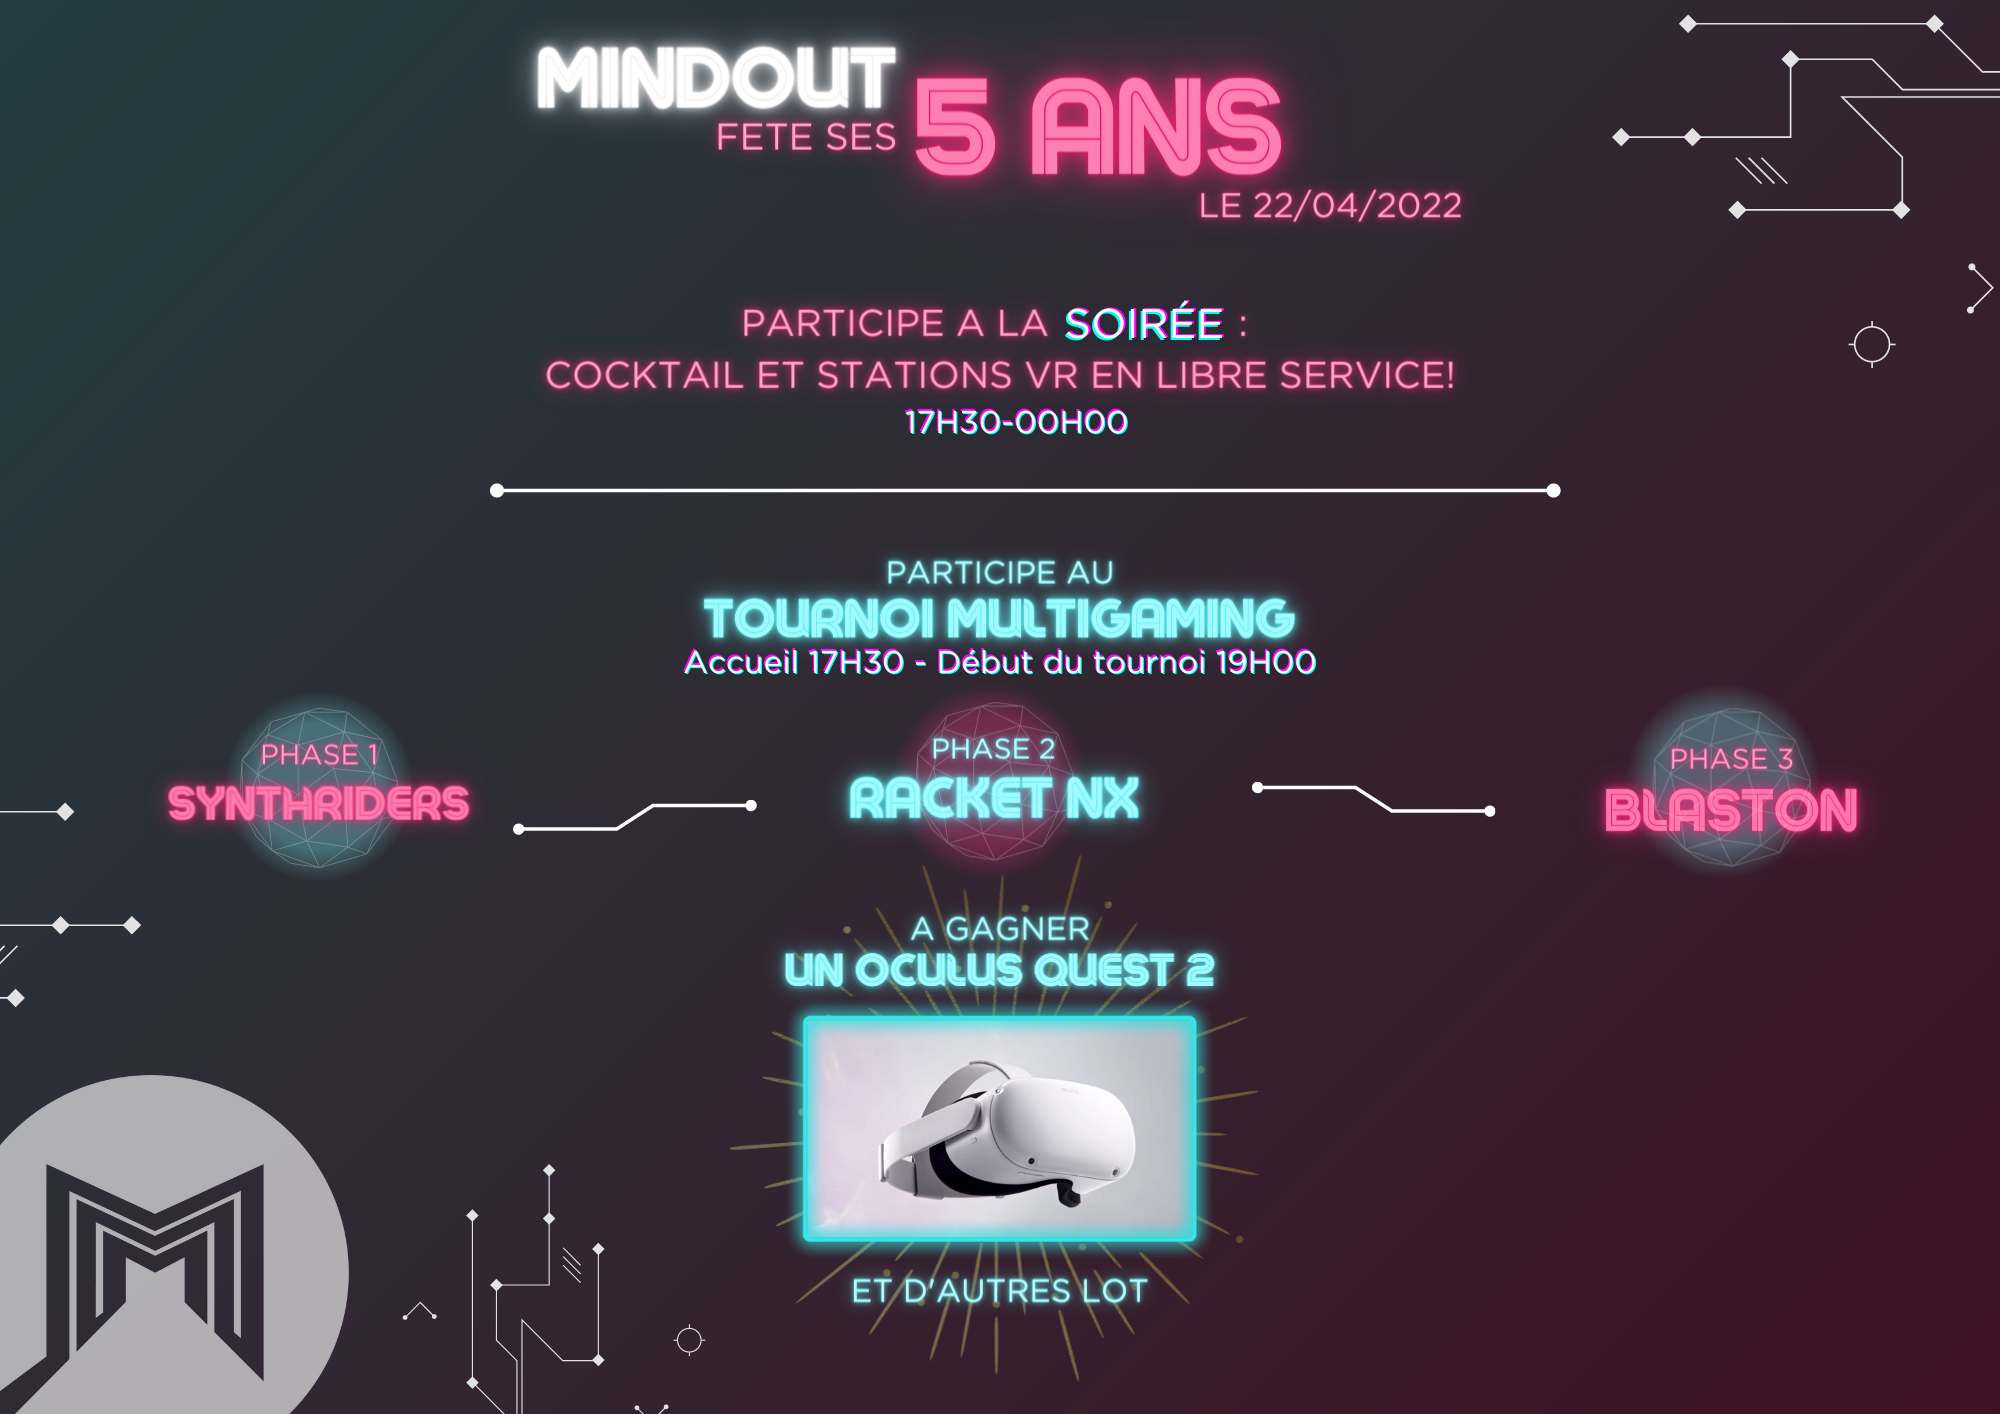 Featured image for “MindOut à 5 ans!”